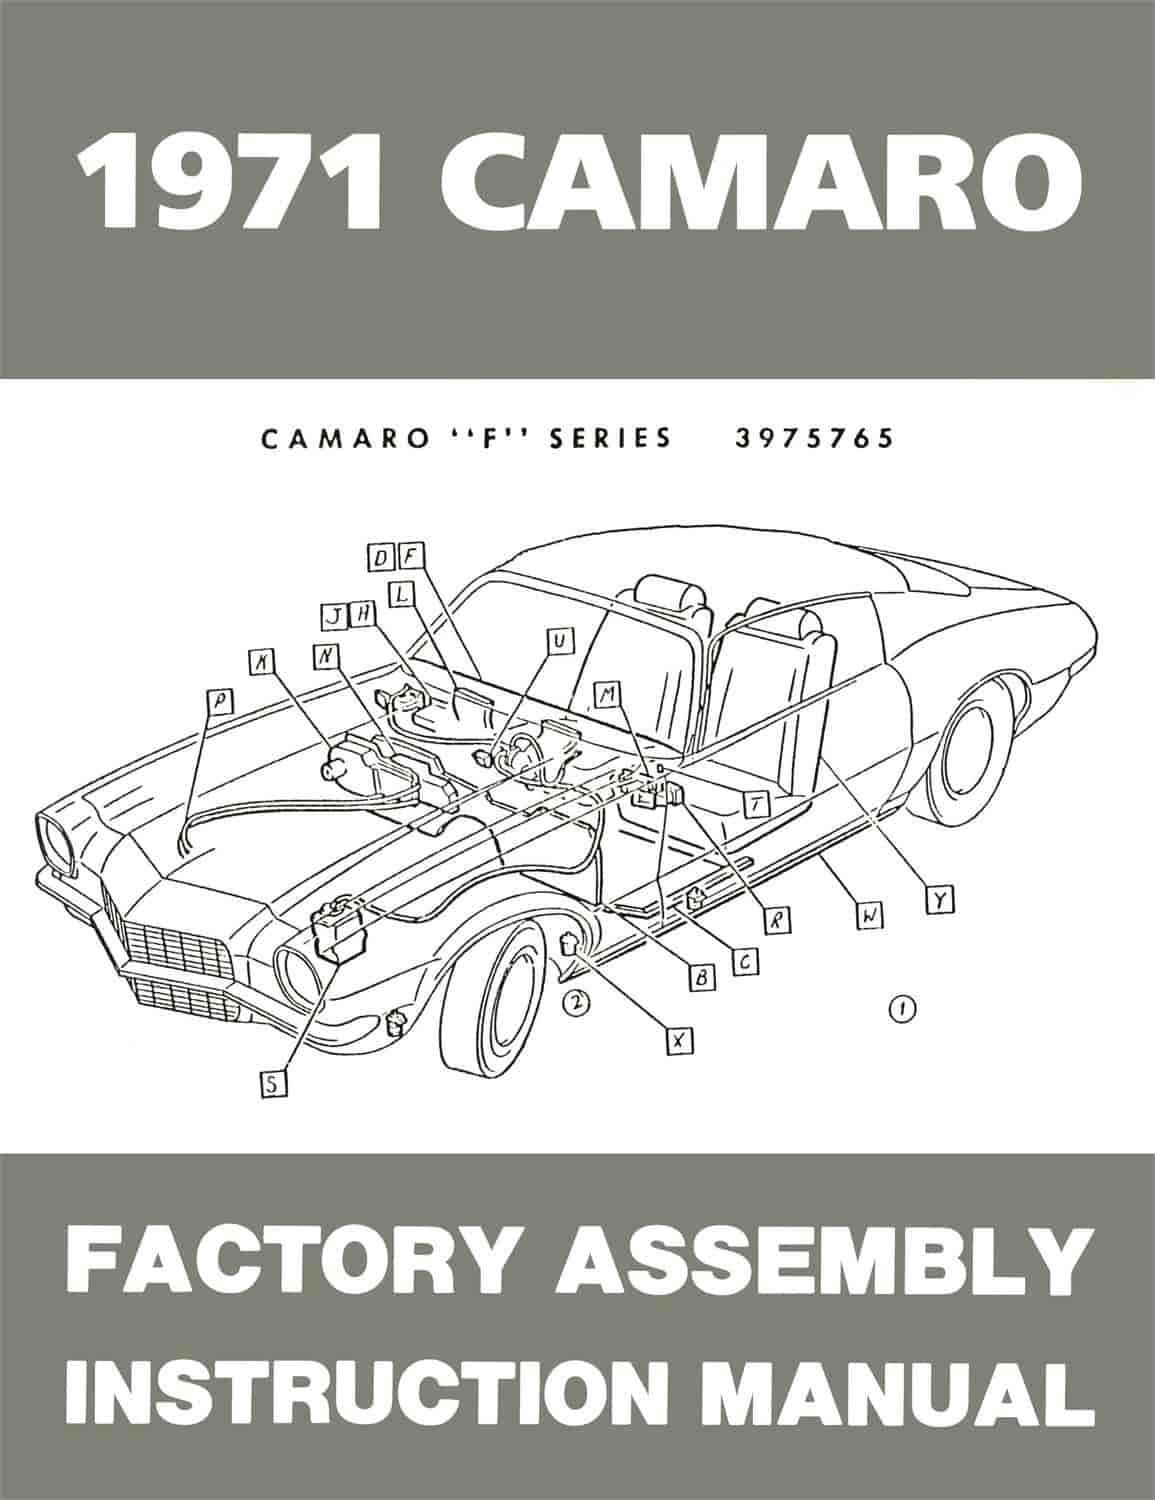 Factory Assembly Manual 1971 Chevy Camaro